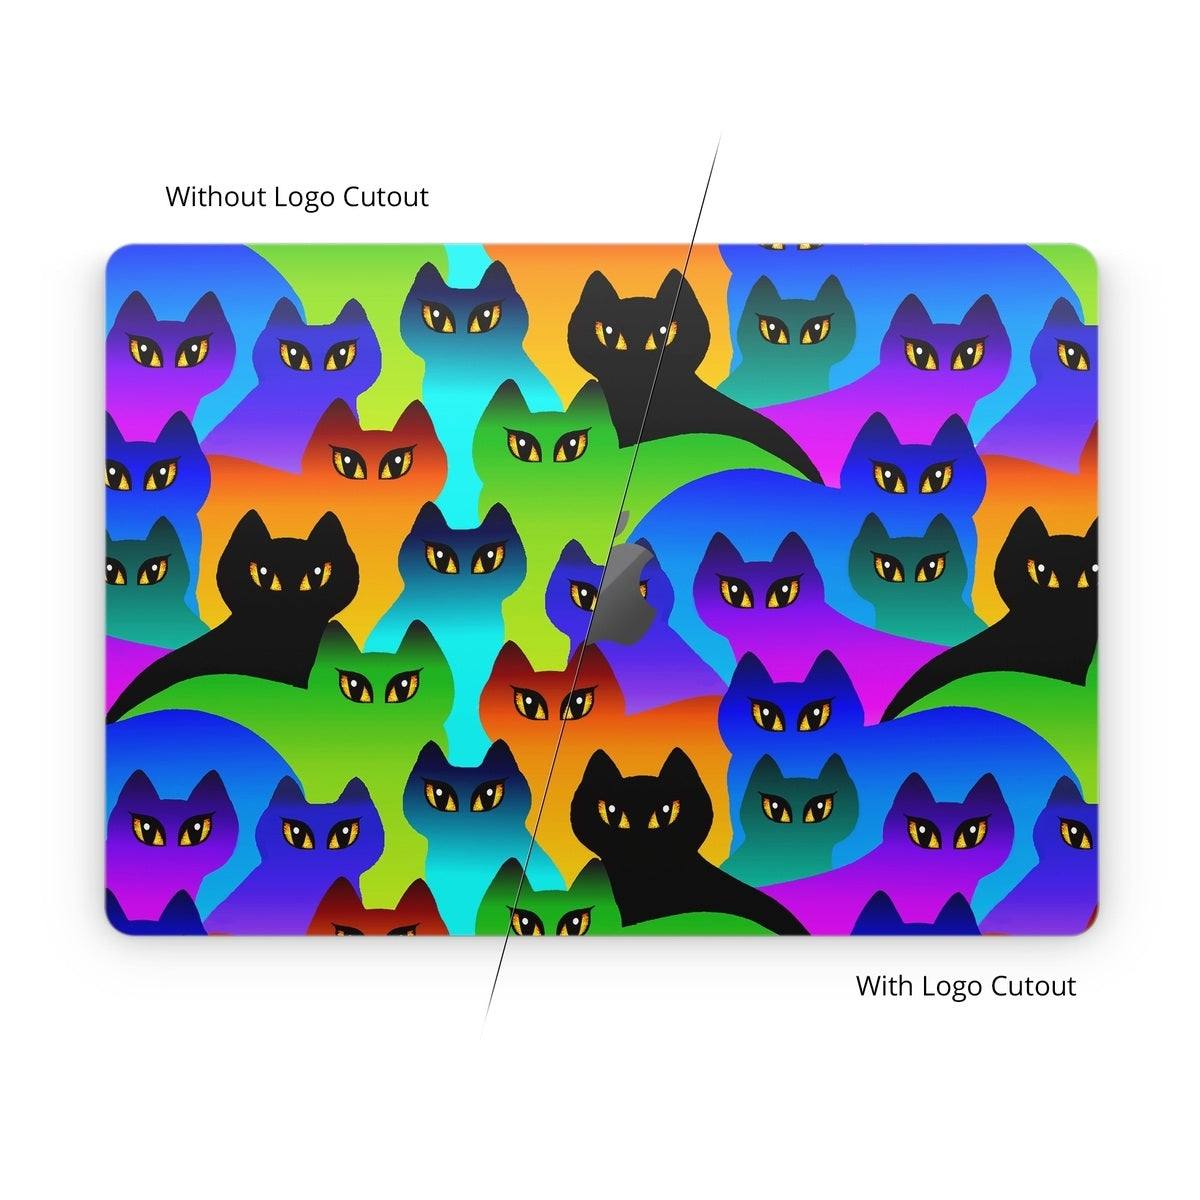 Rainbow Cats - Apple MacBook Skin